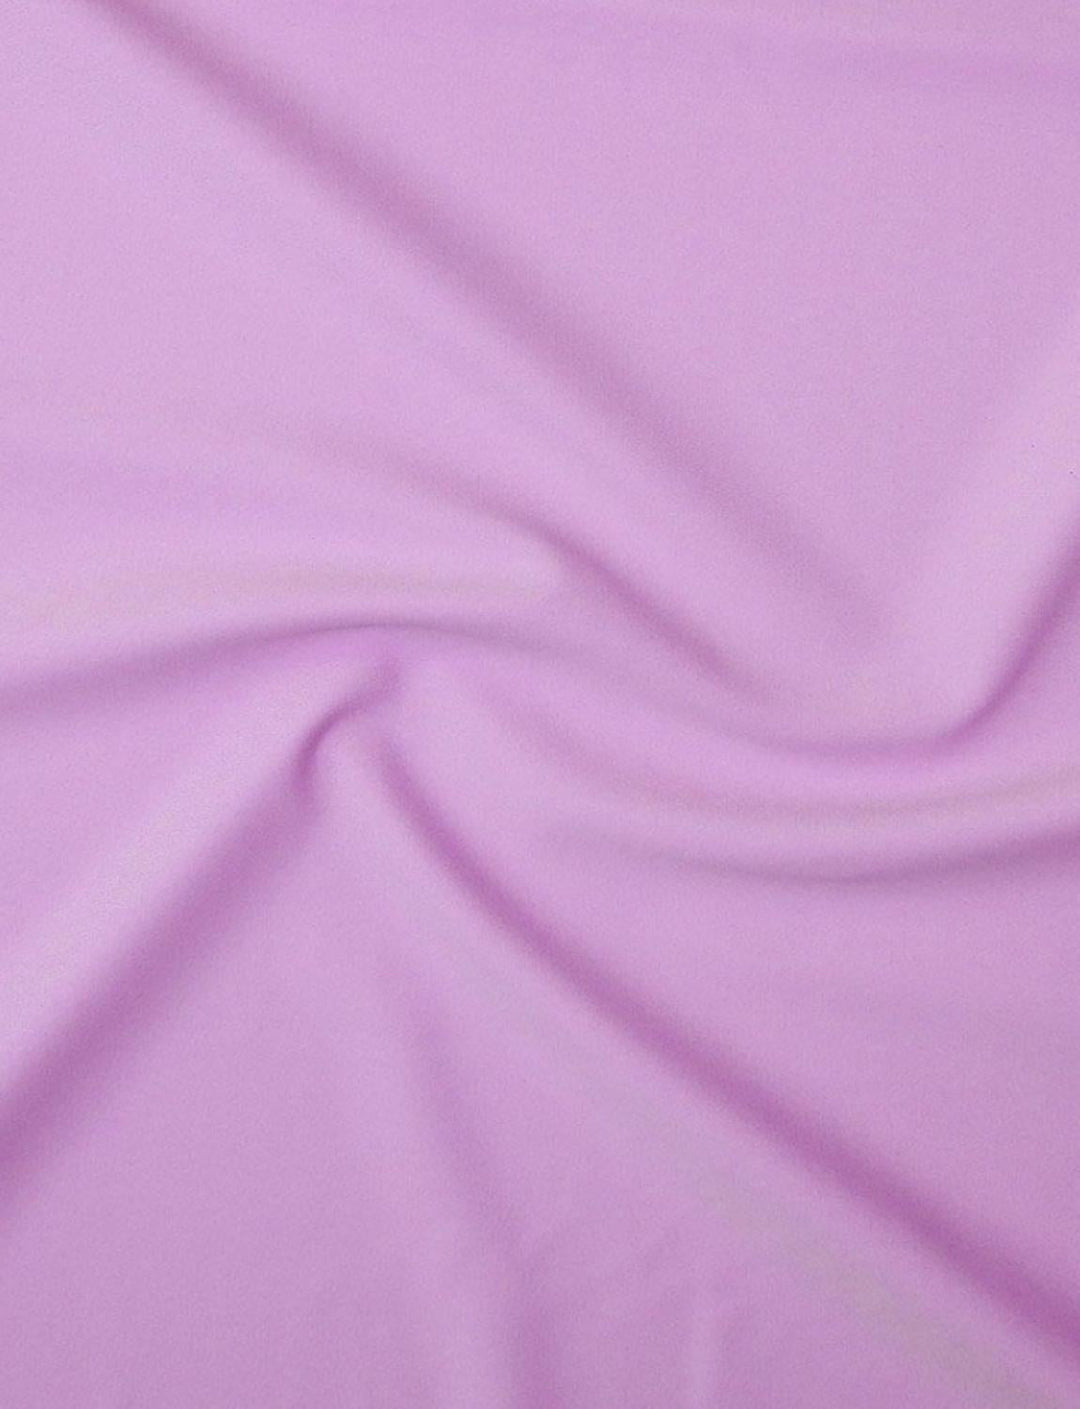 lilac lycra fabric swatch